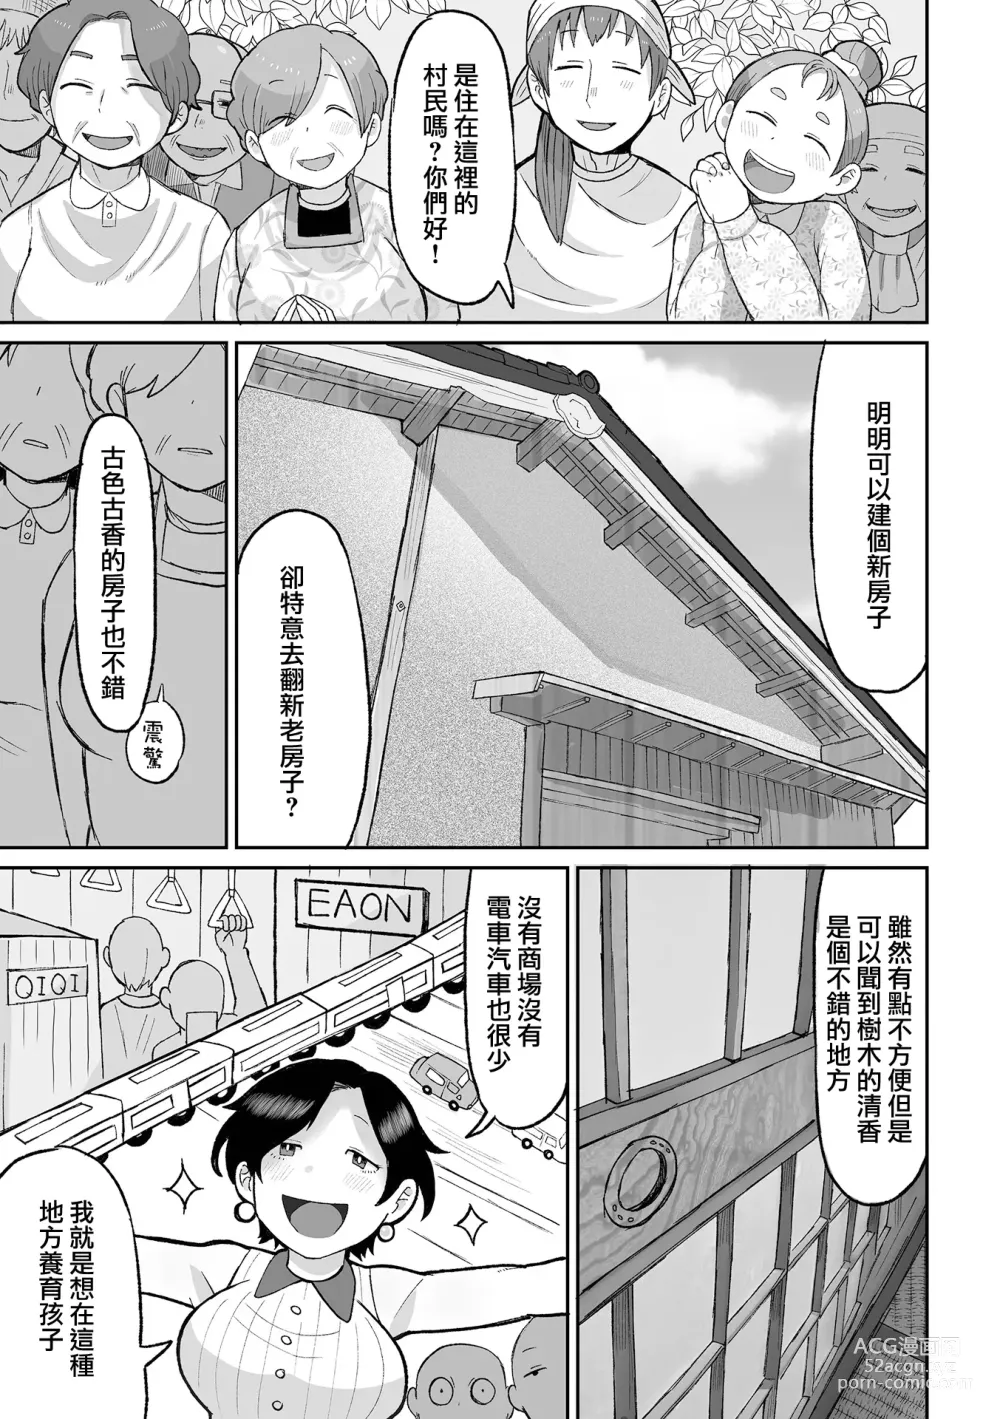 Page 4 of manga 快樂的鄉間生活